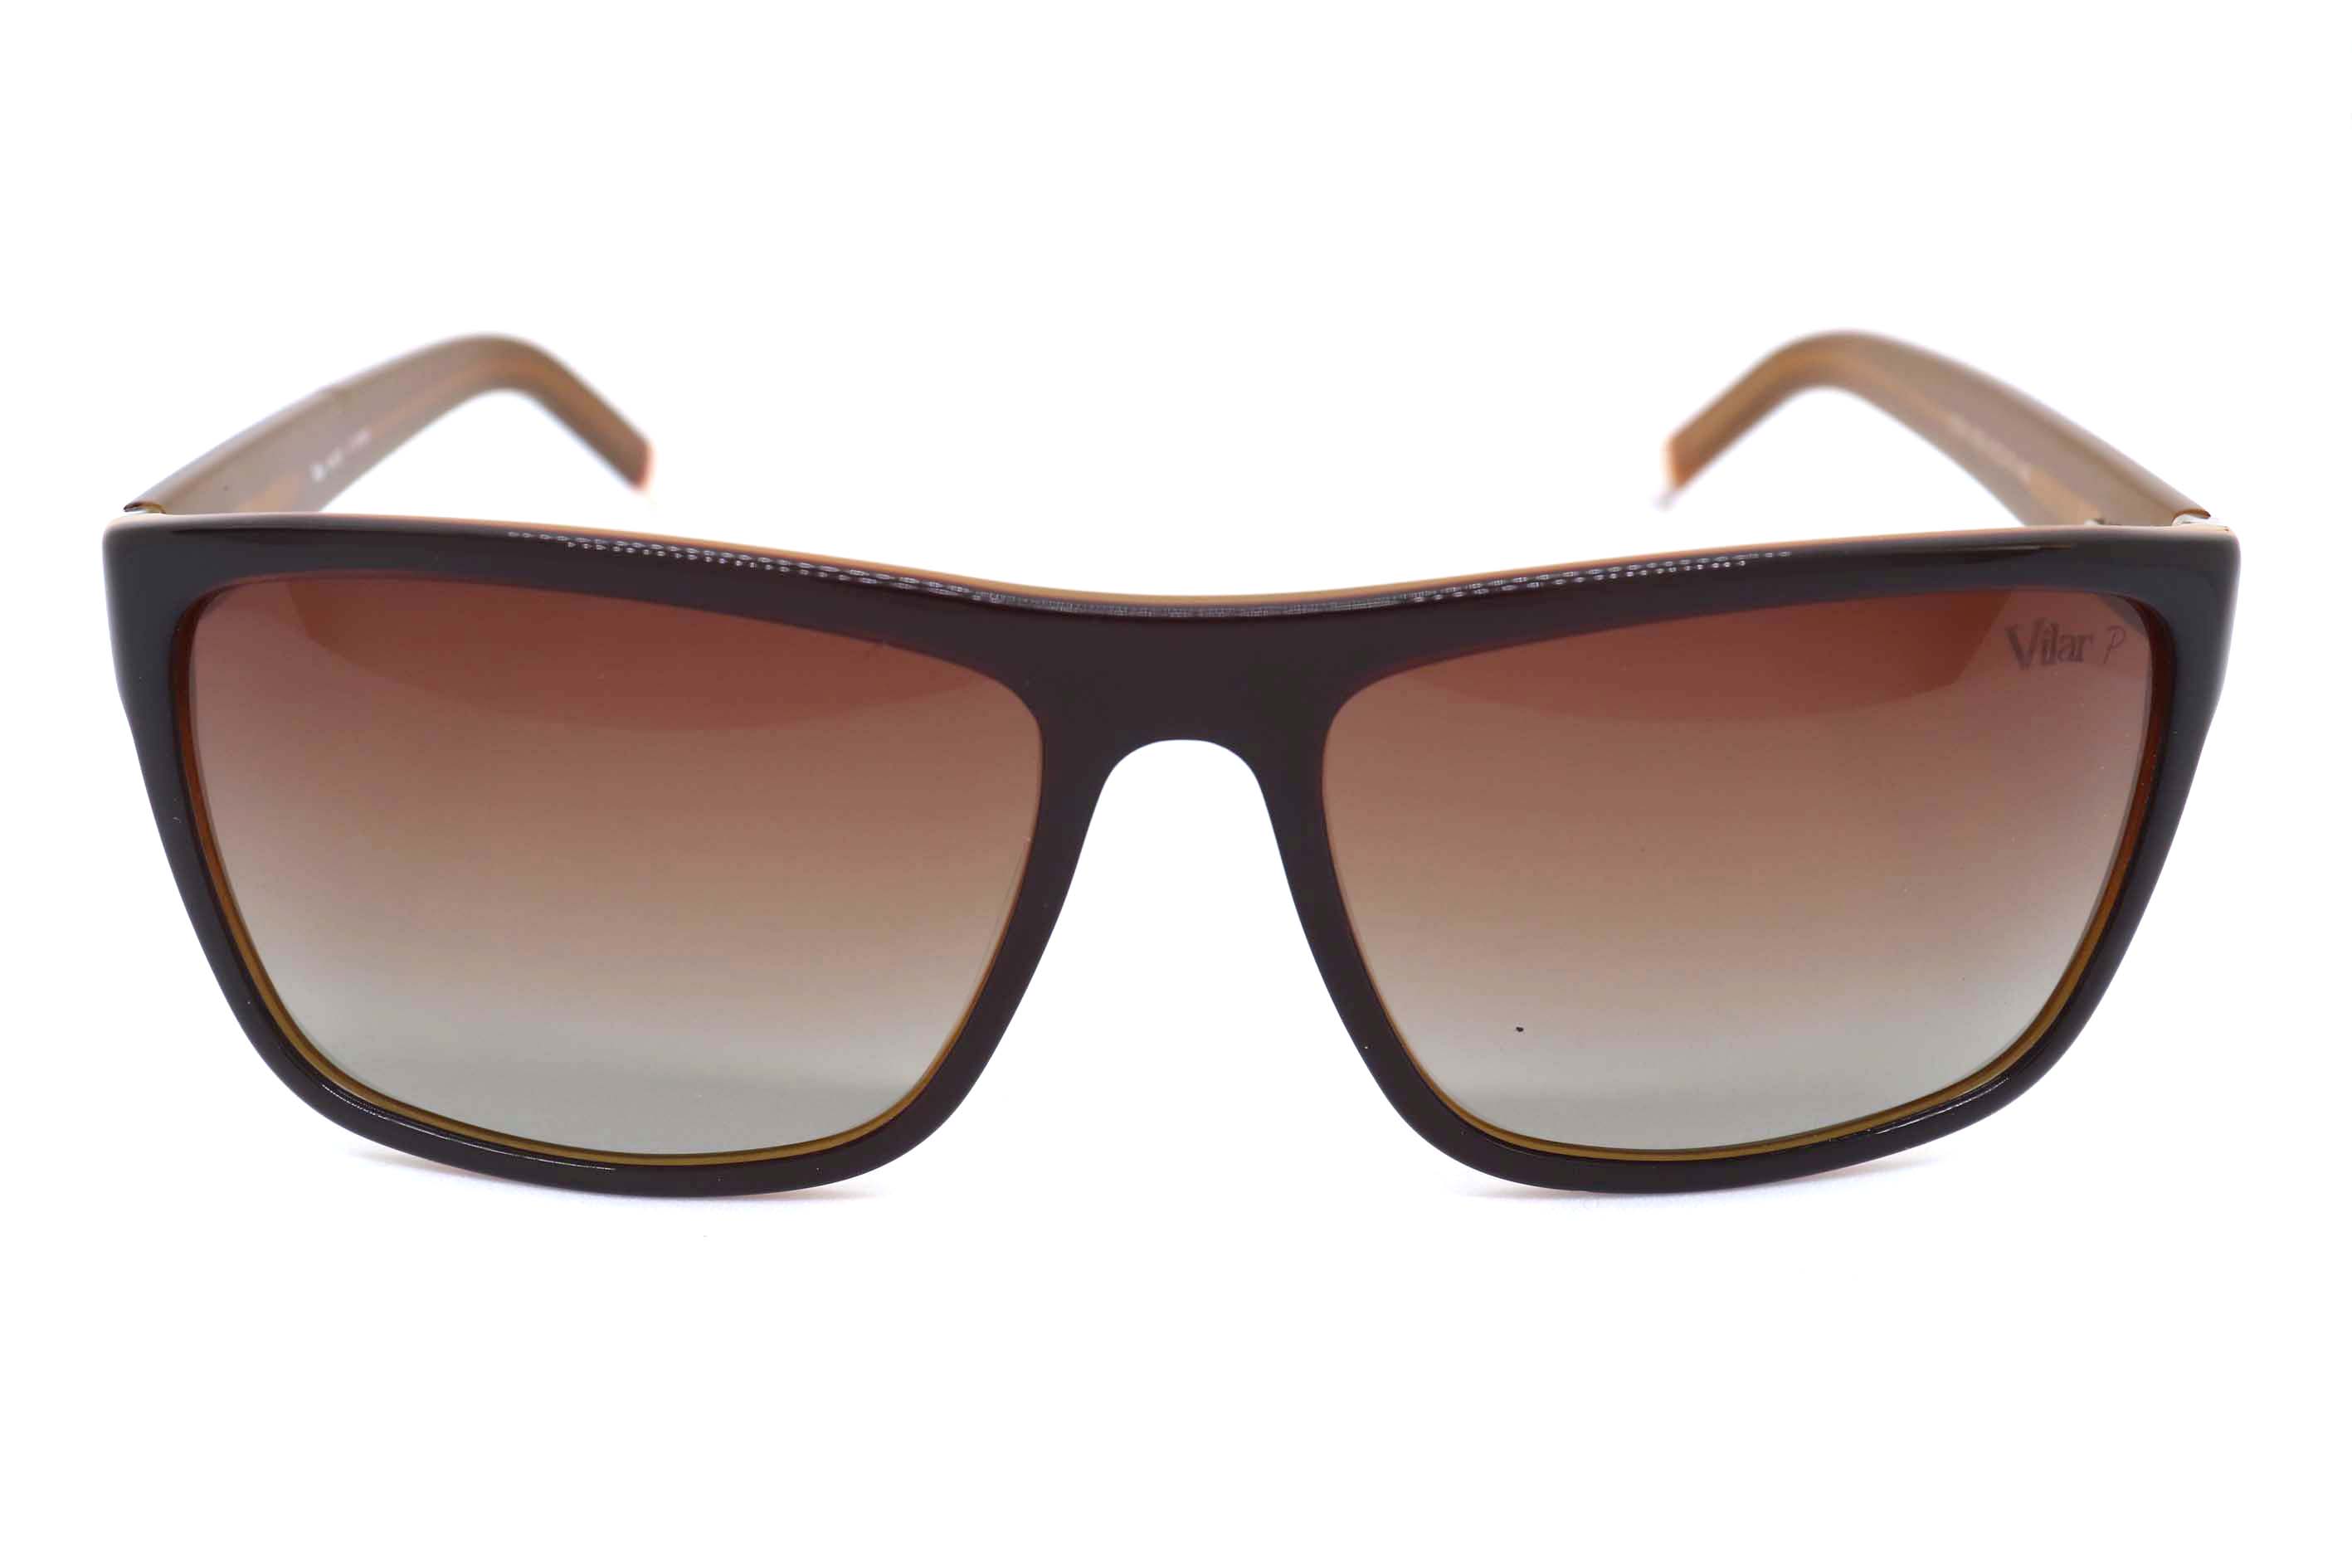 Vilar Sunglasses -19301-005-57-17-145